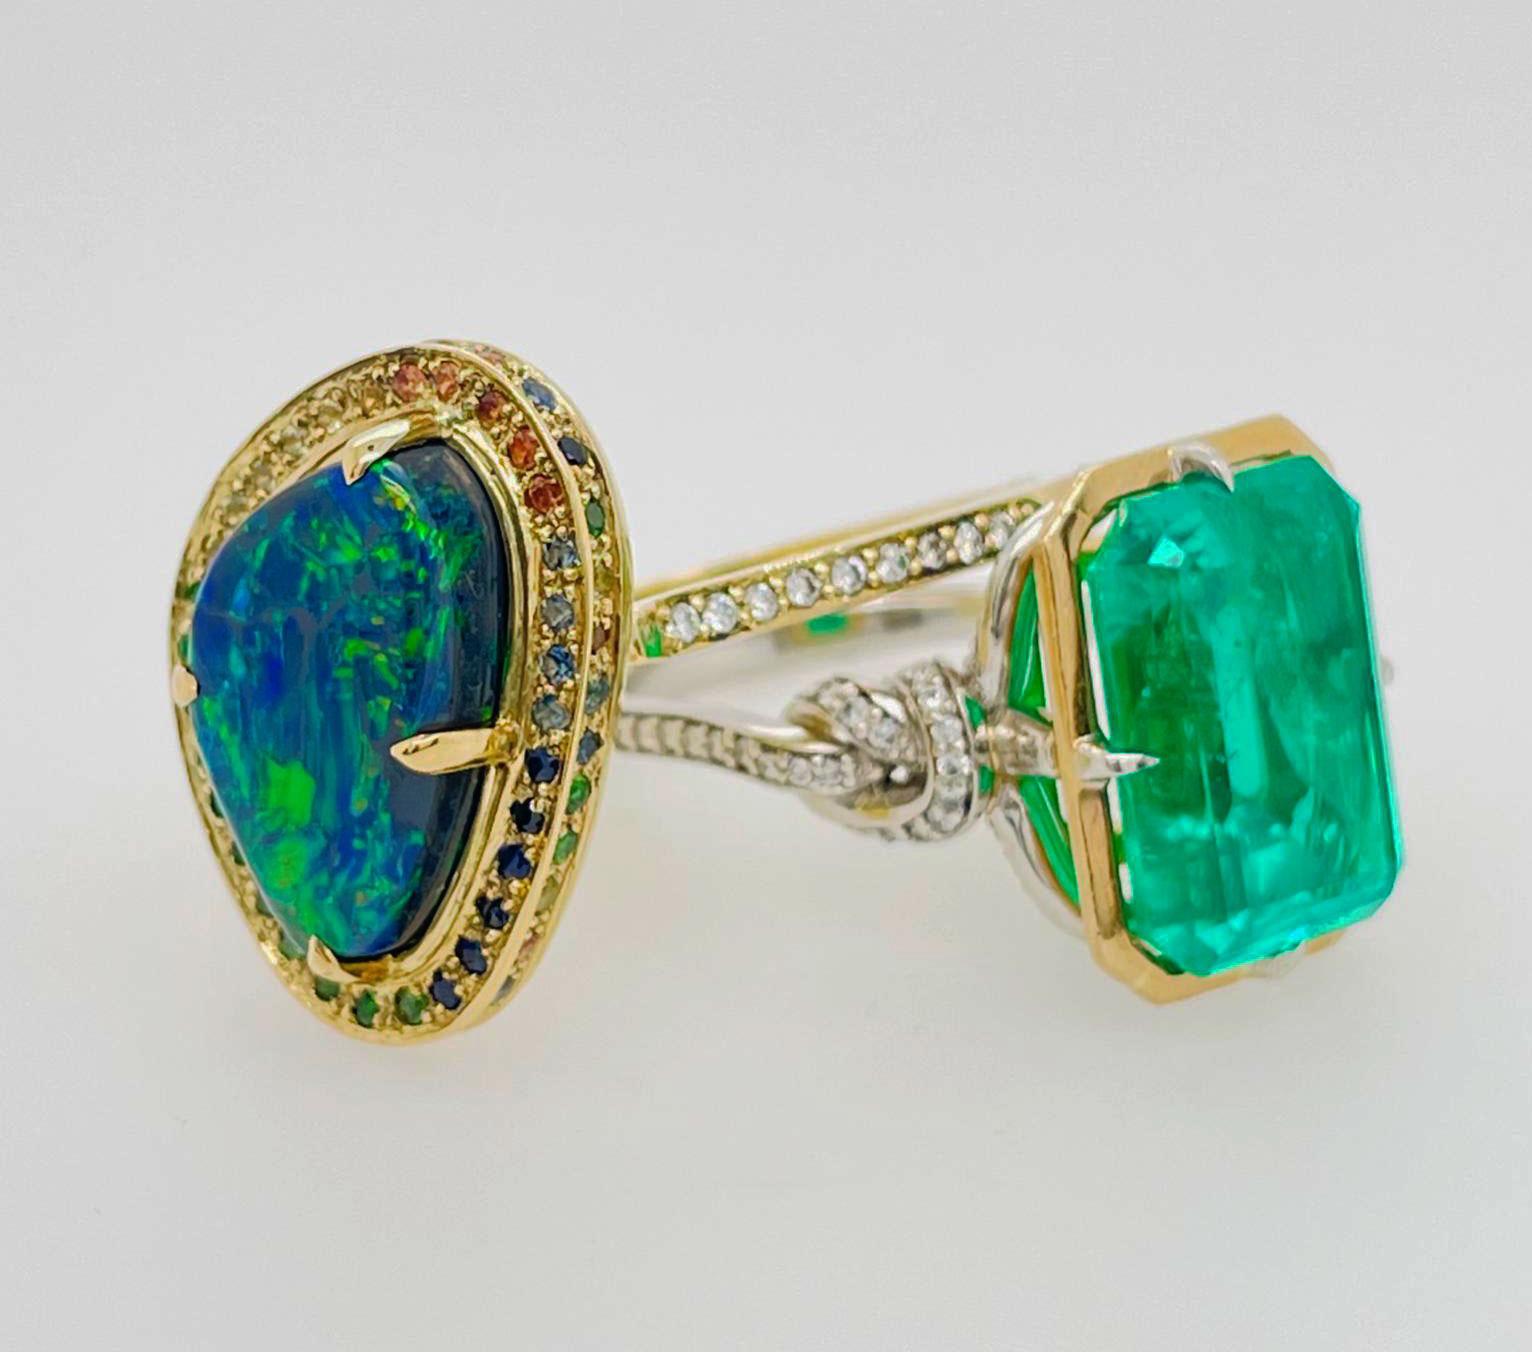 1ct emerald ring